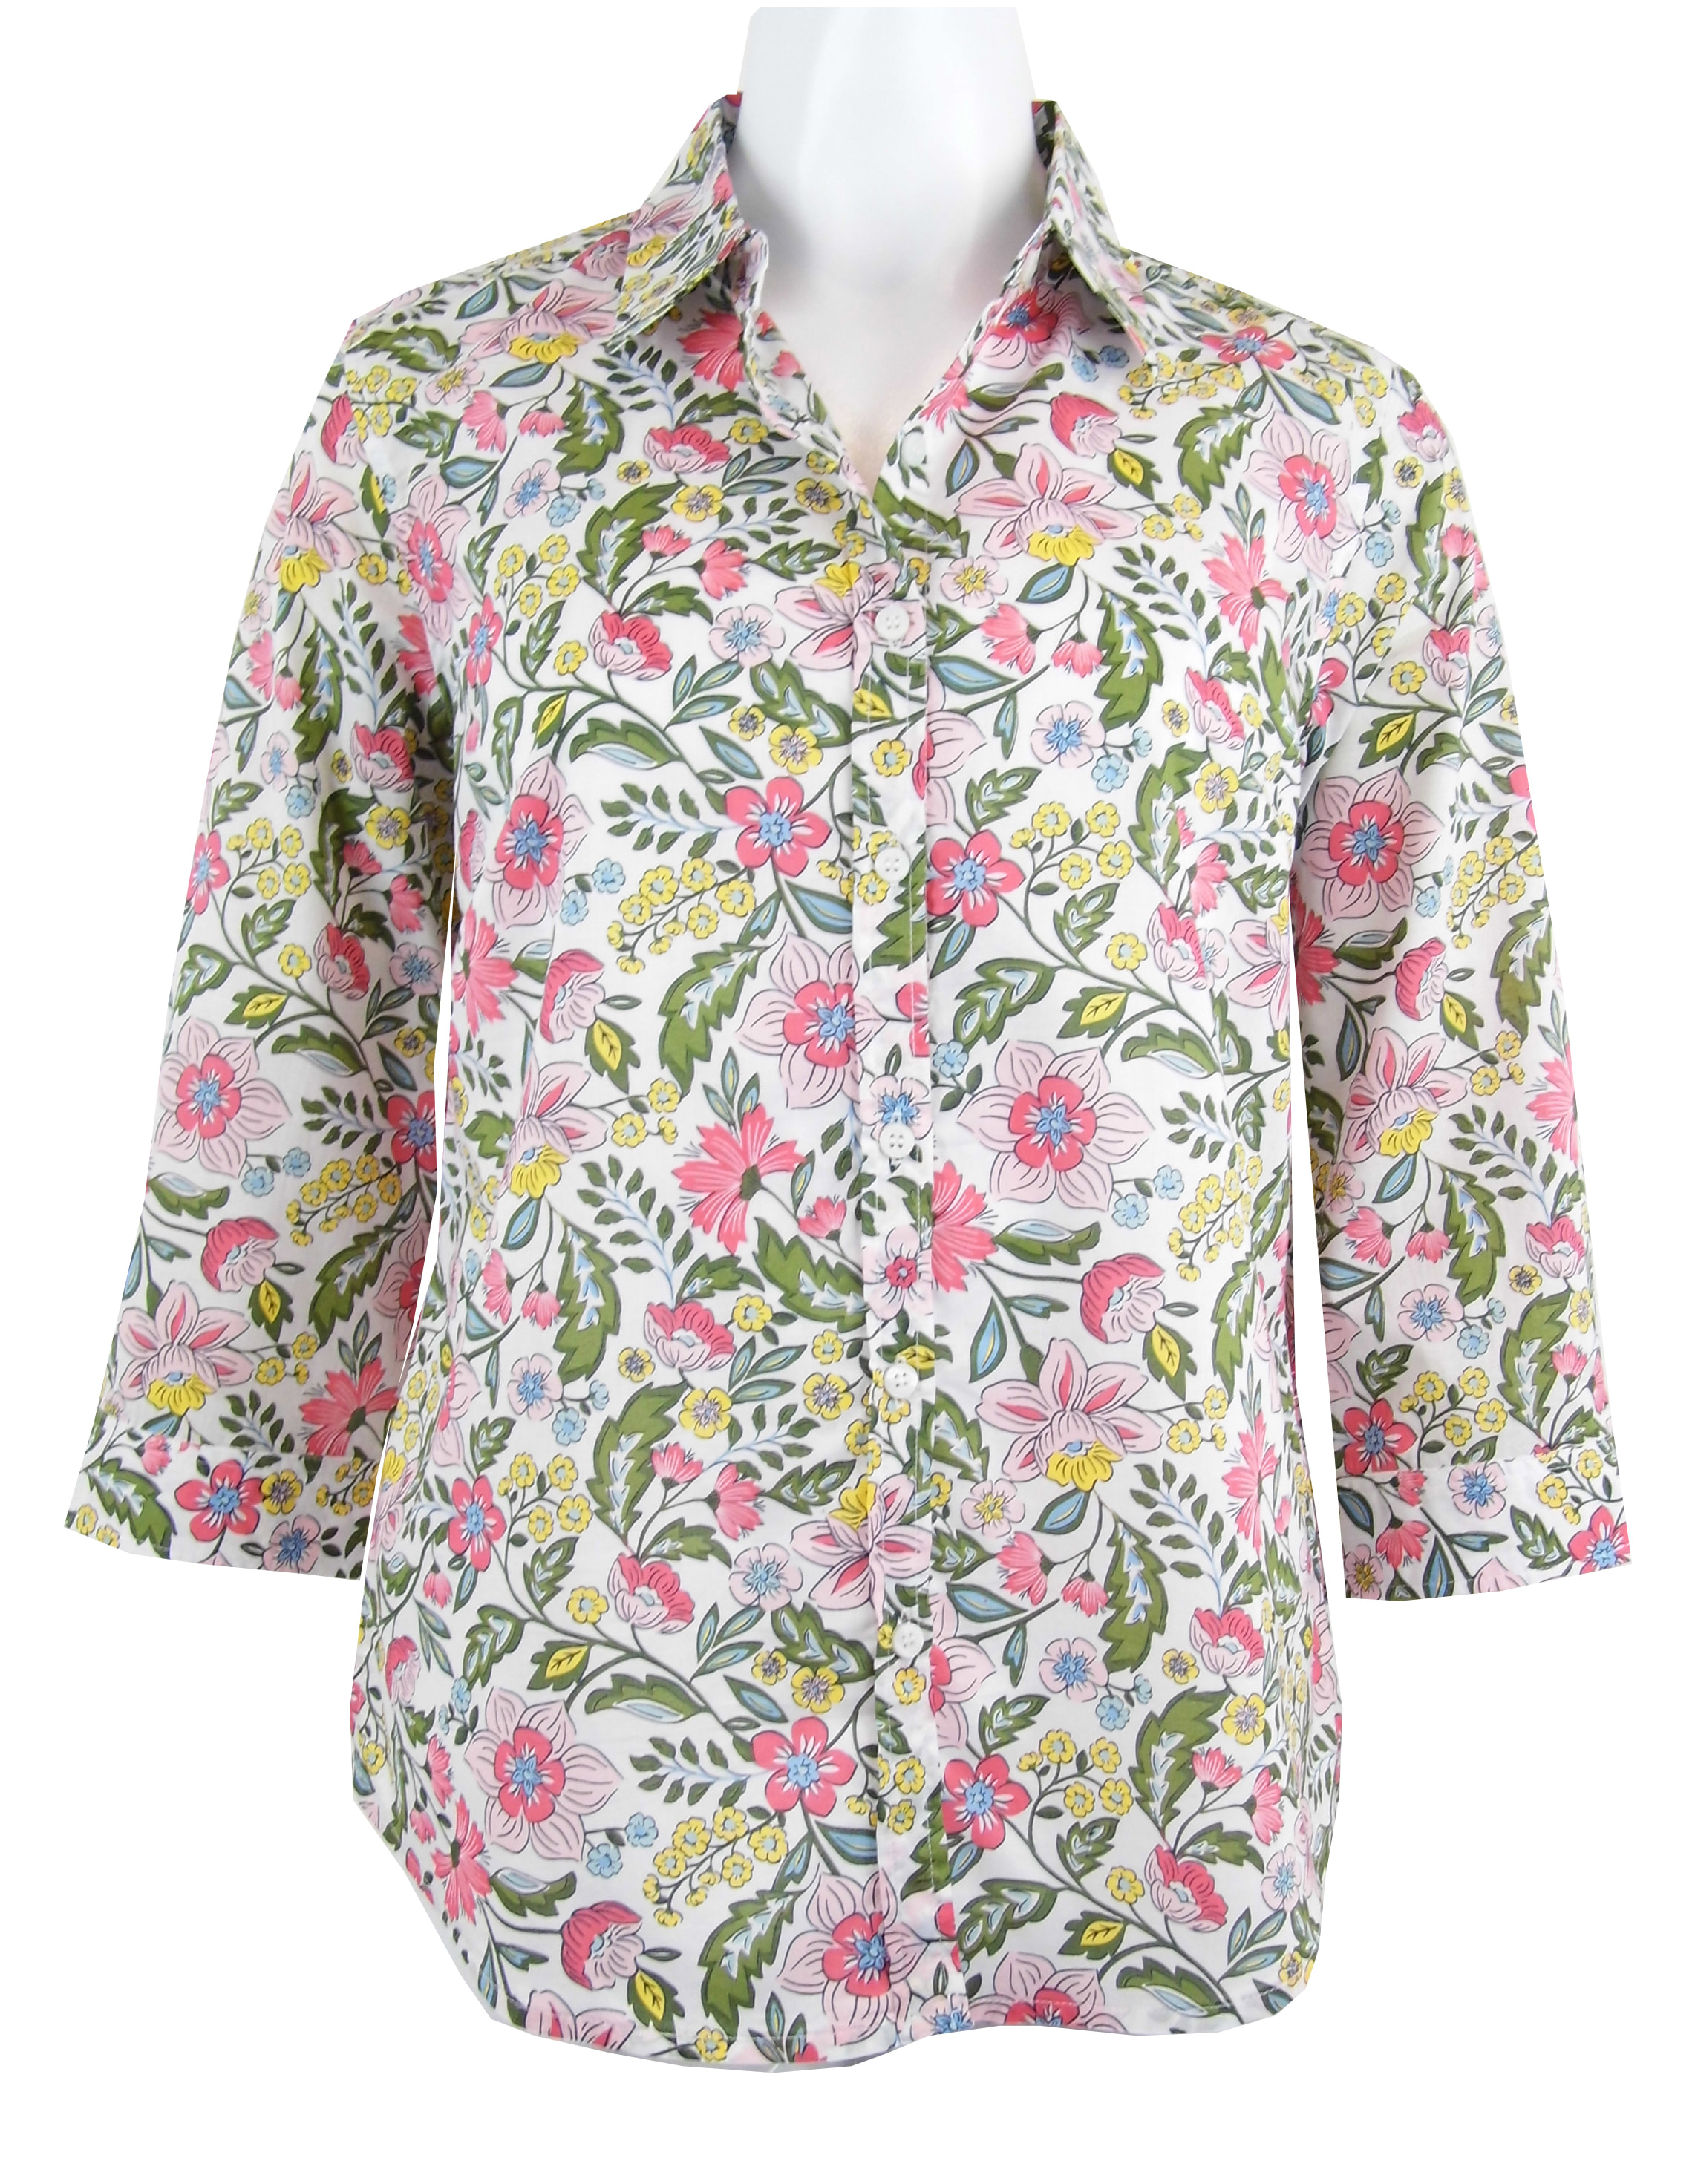 Women's floral print cotton 3/4 sleeve shirt